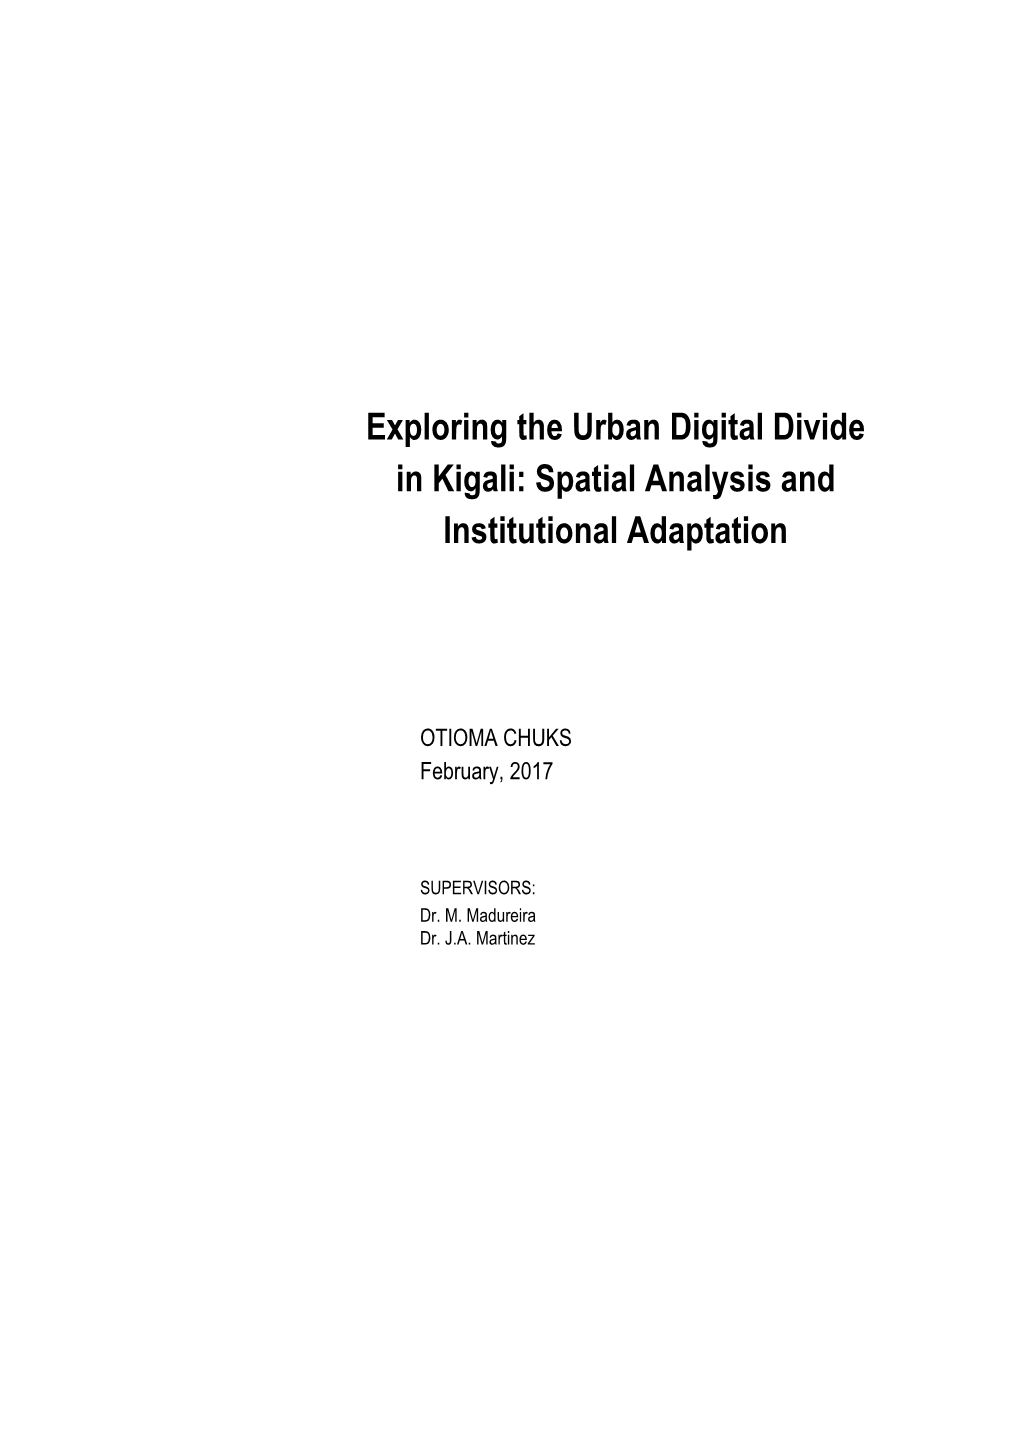 Exploring the Urban Digital Divide in Kigali: Spatial Analysis And